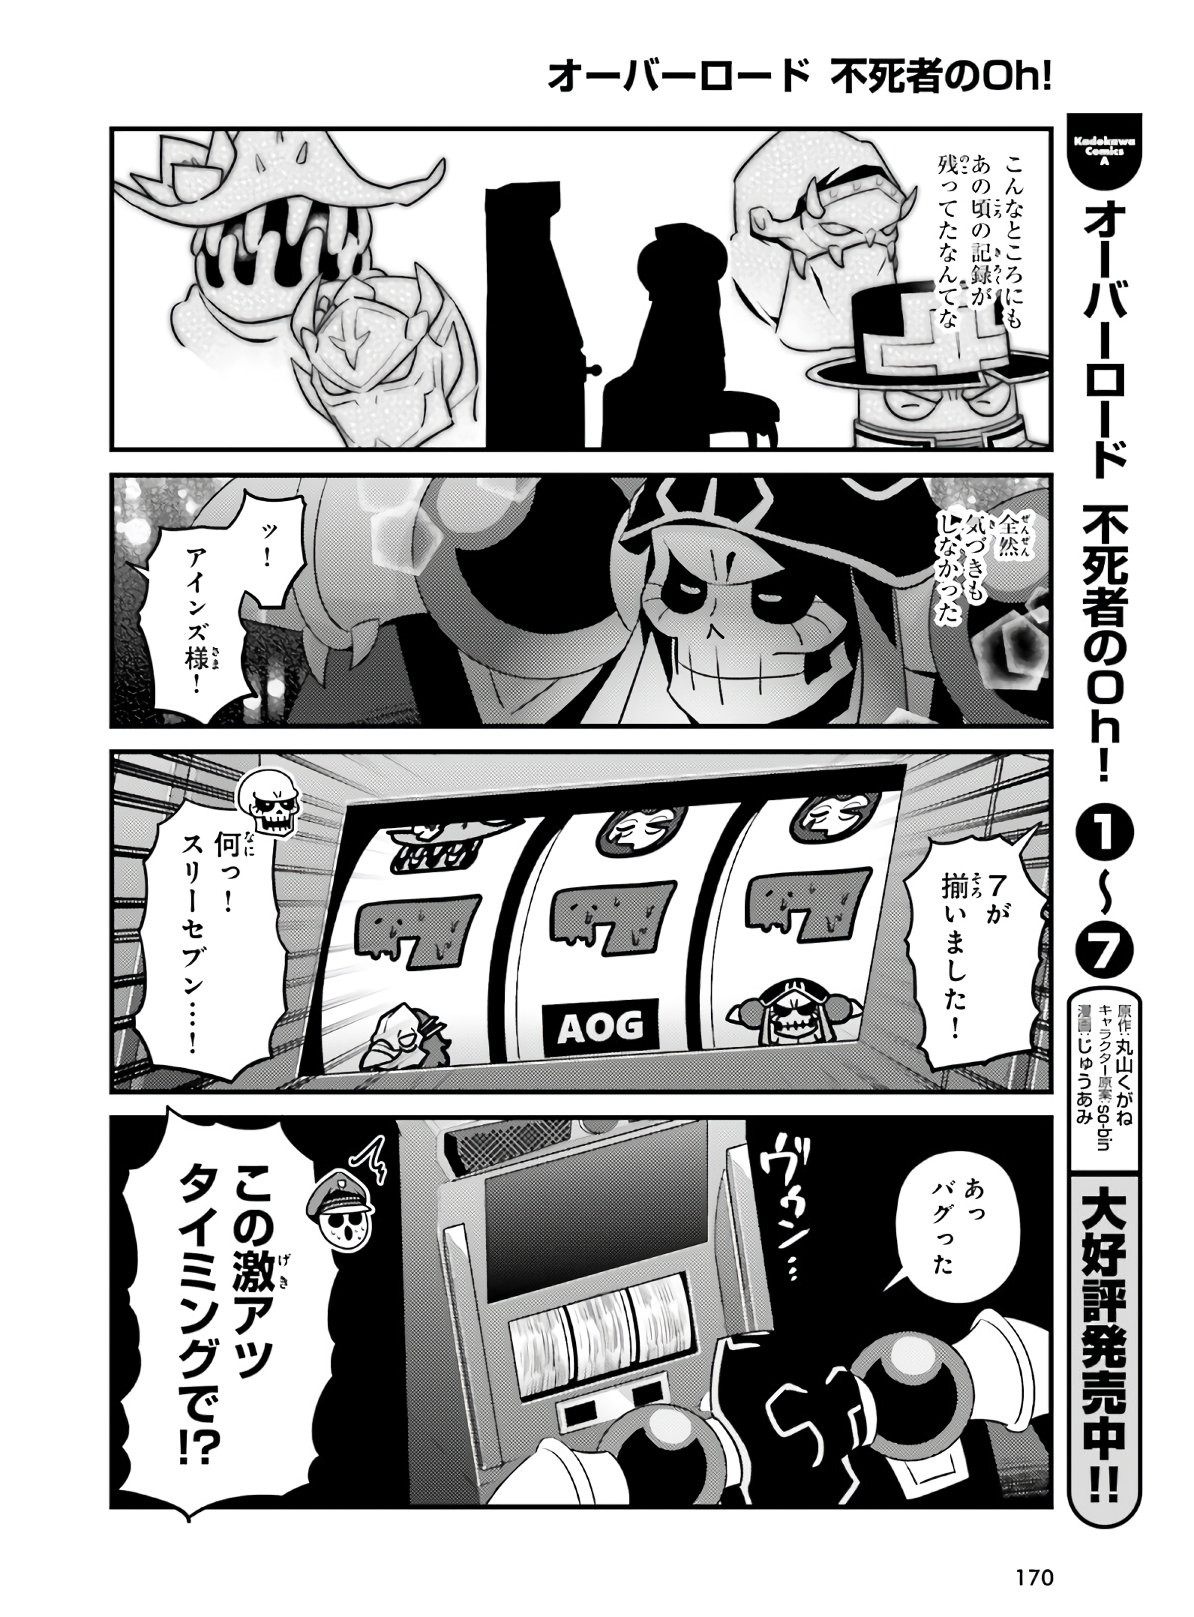 Overlord-Fushisha-no-Oh - Chapter 44 - Page 18